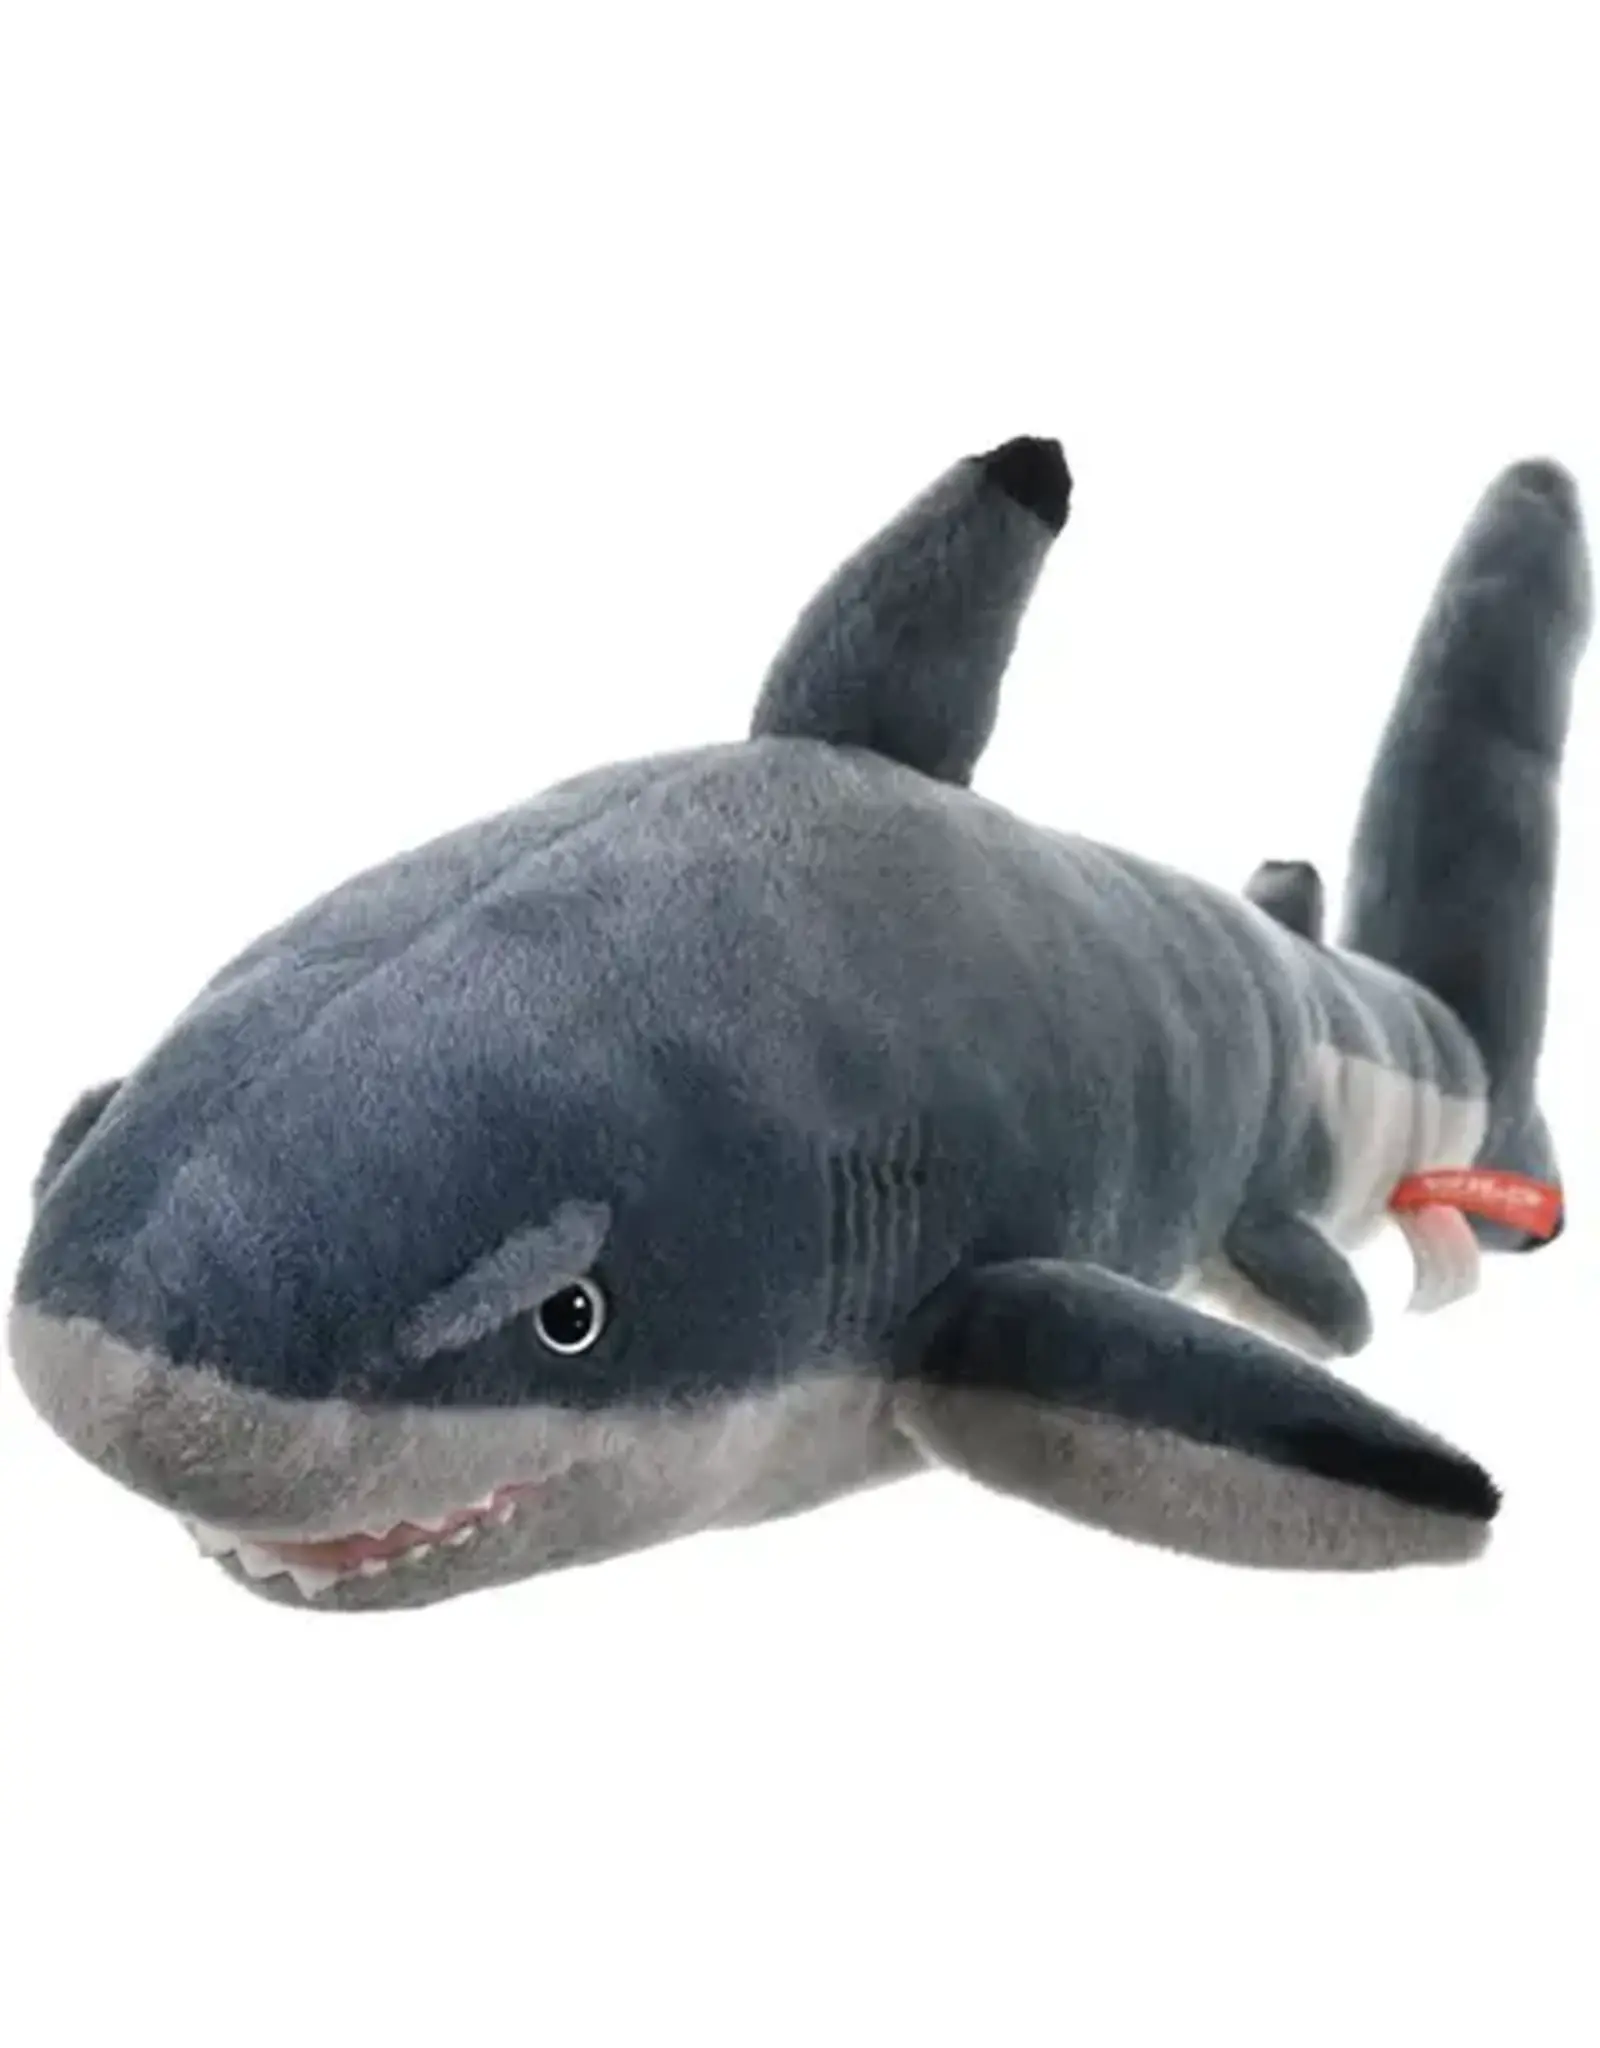 Black Tipped Shark Stuffed Animal - 15"